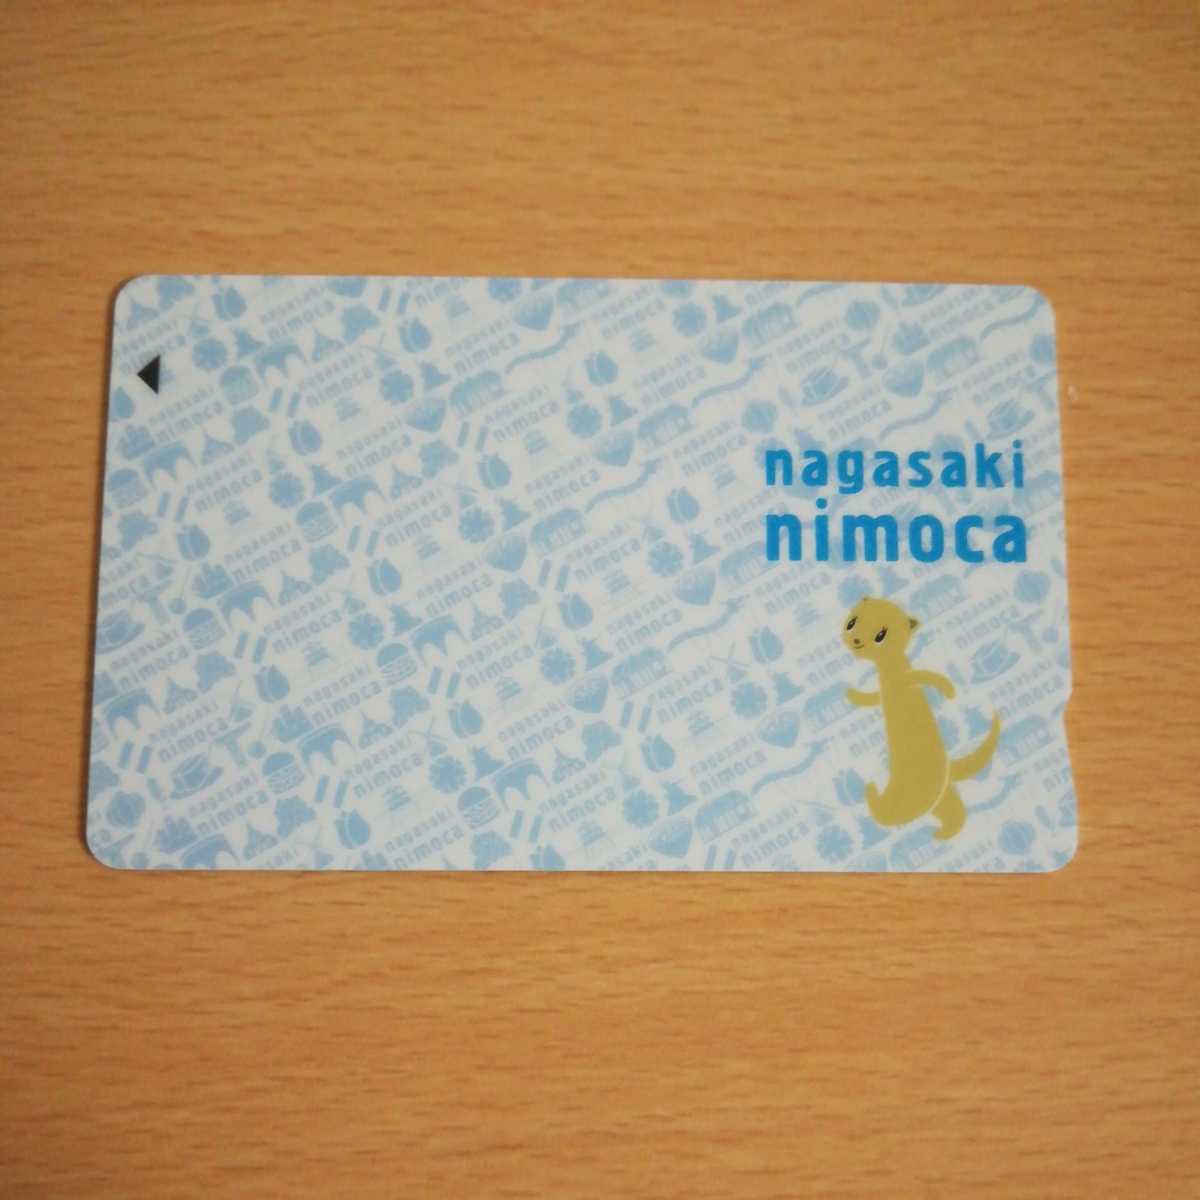 nagasaki nimoca　長崎ニモカ　残高なし　送料84円　交通系ICカード_画像1